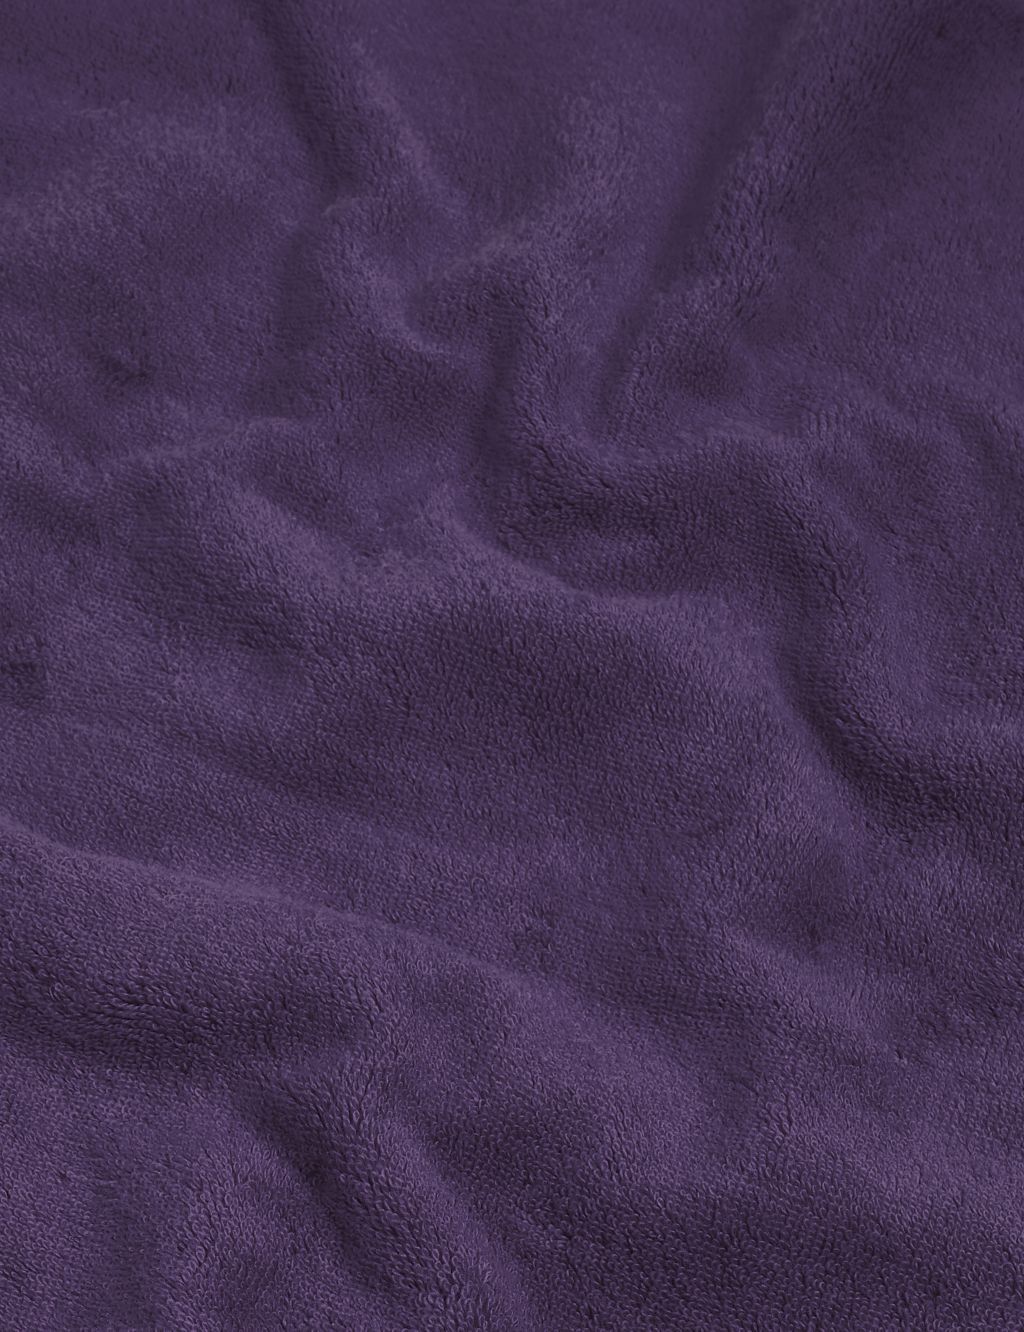 Super Soft Pure Cotton Antibacterial Towel image 6